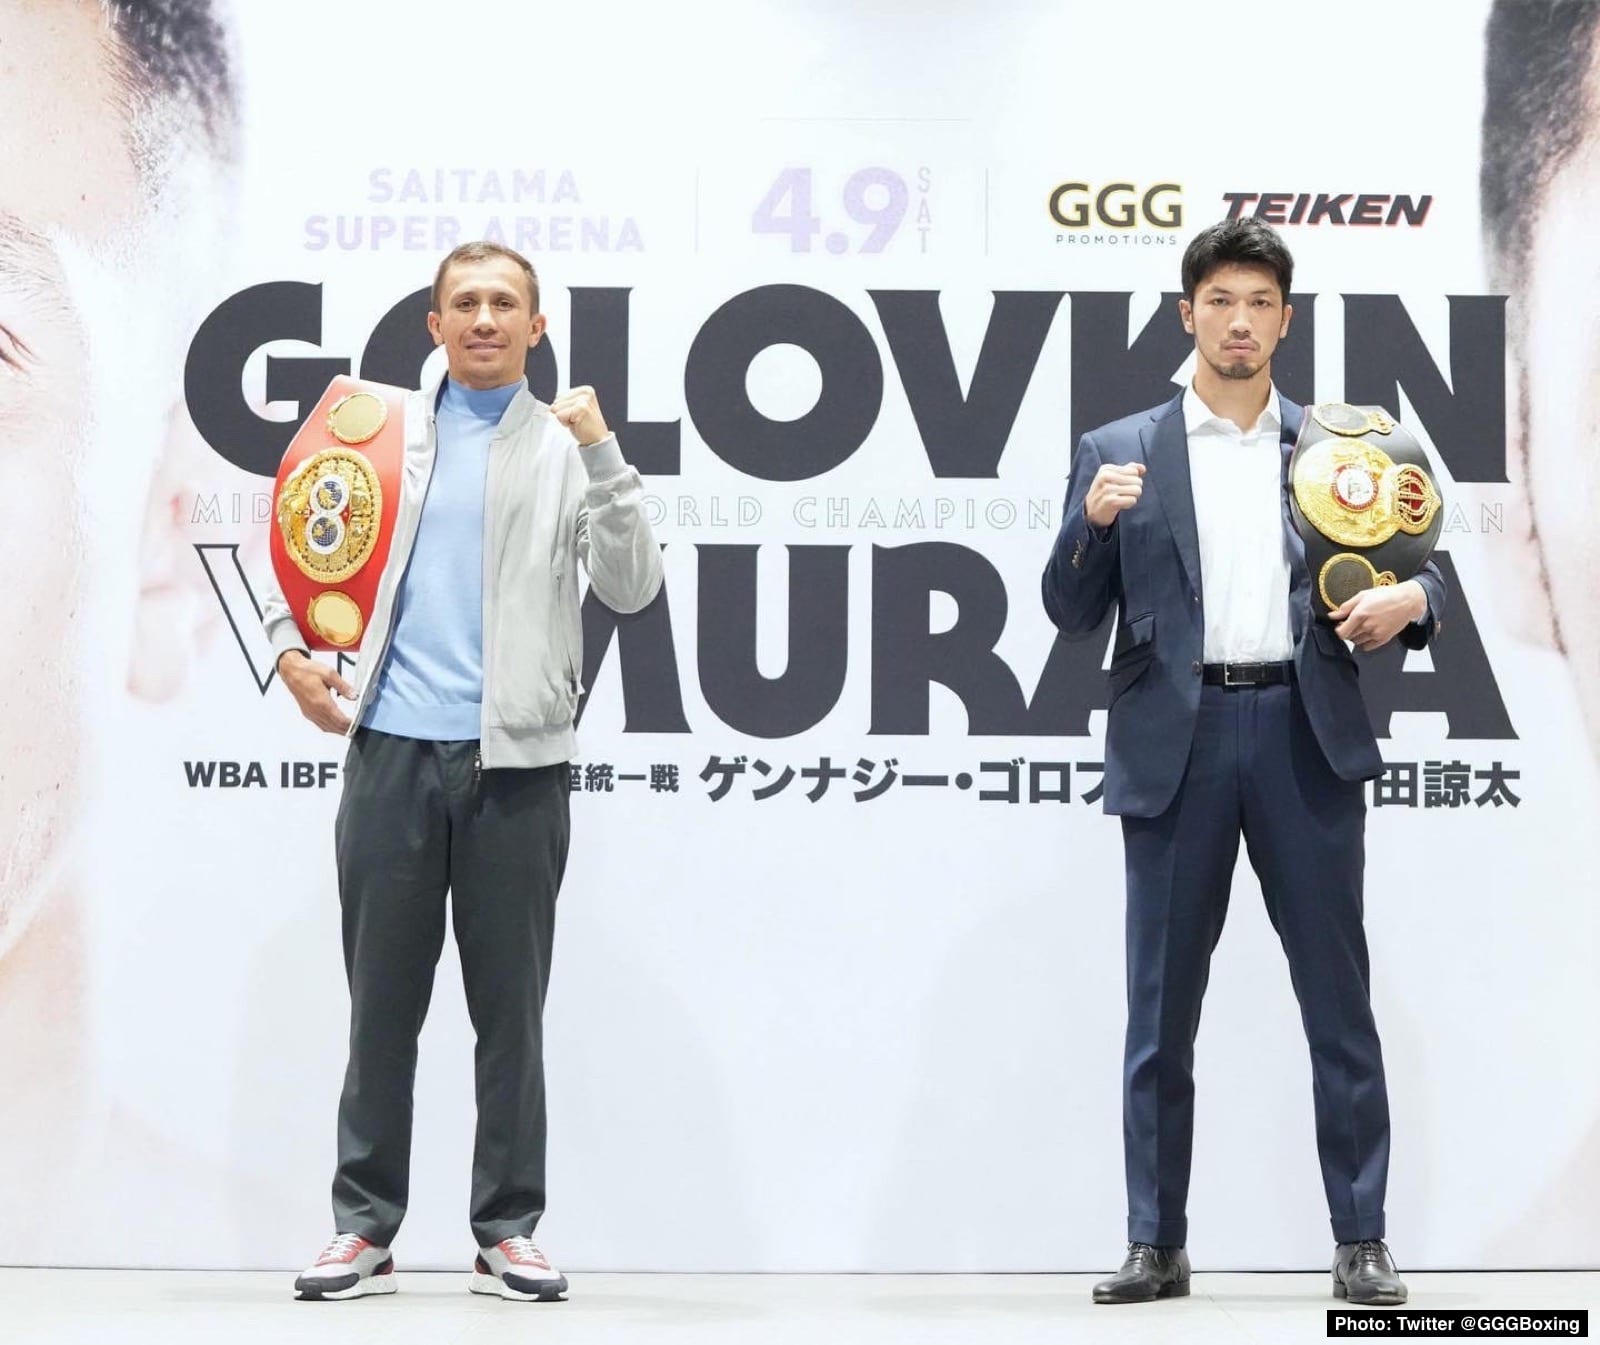 Gennadiy Golovkin on Ryota Murata: 'It's going to be a fun fight'